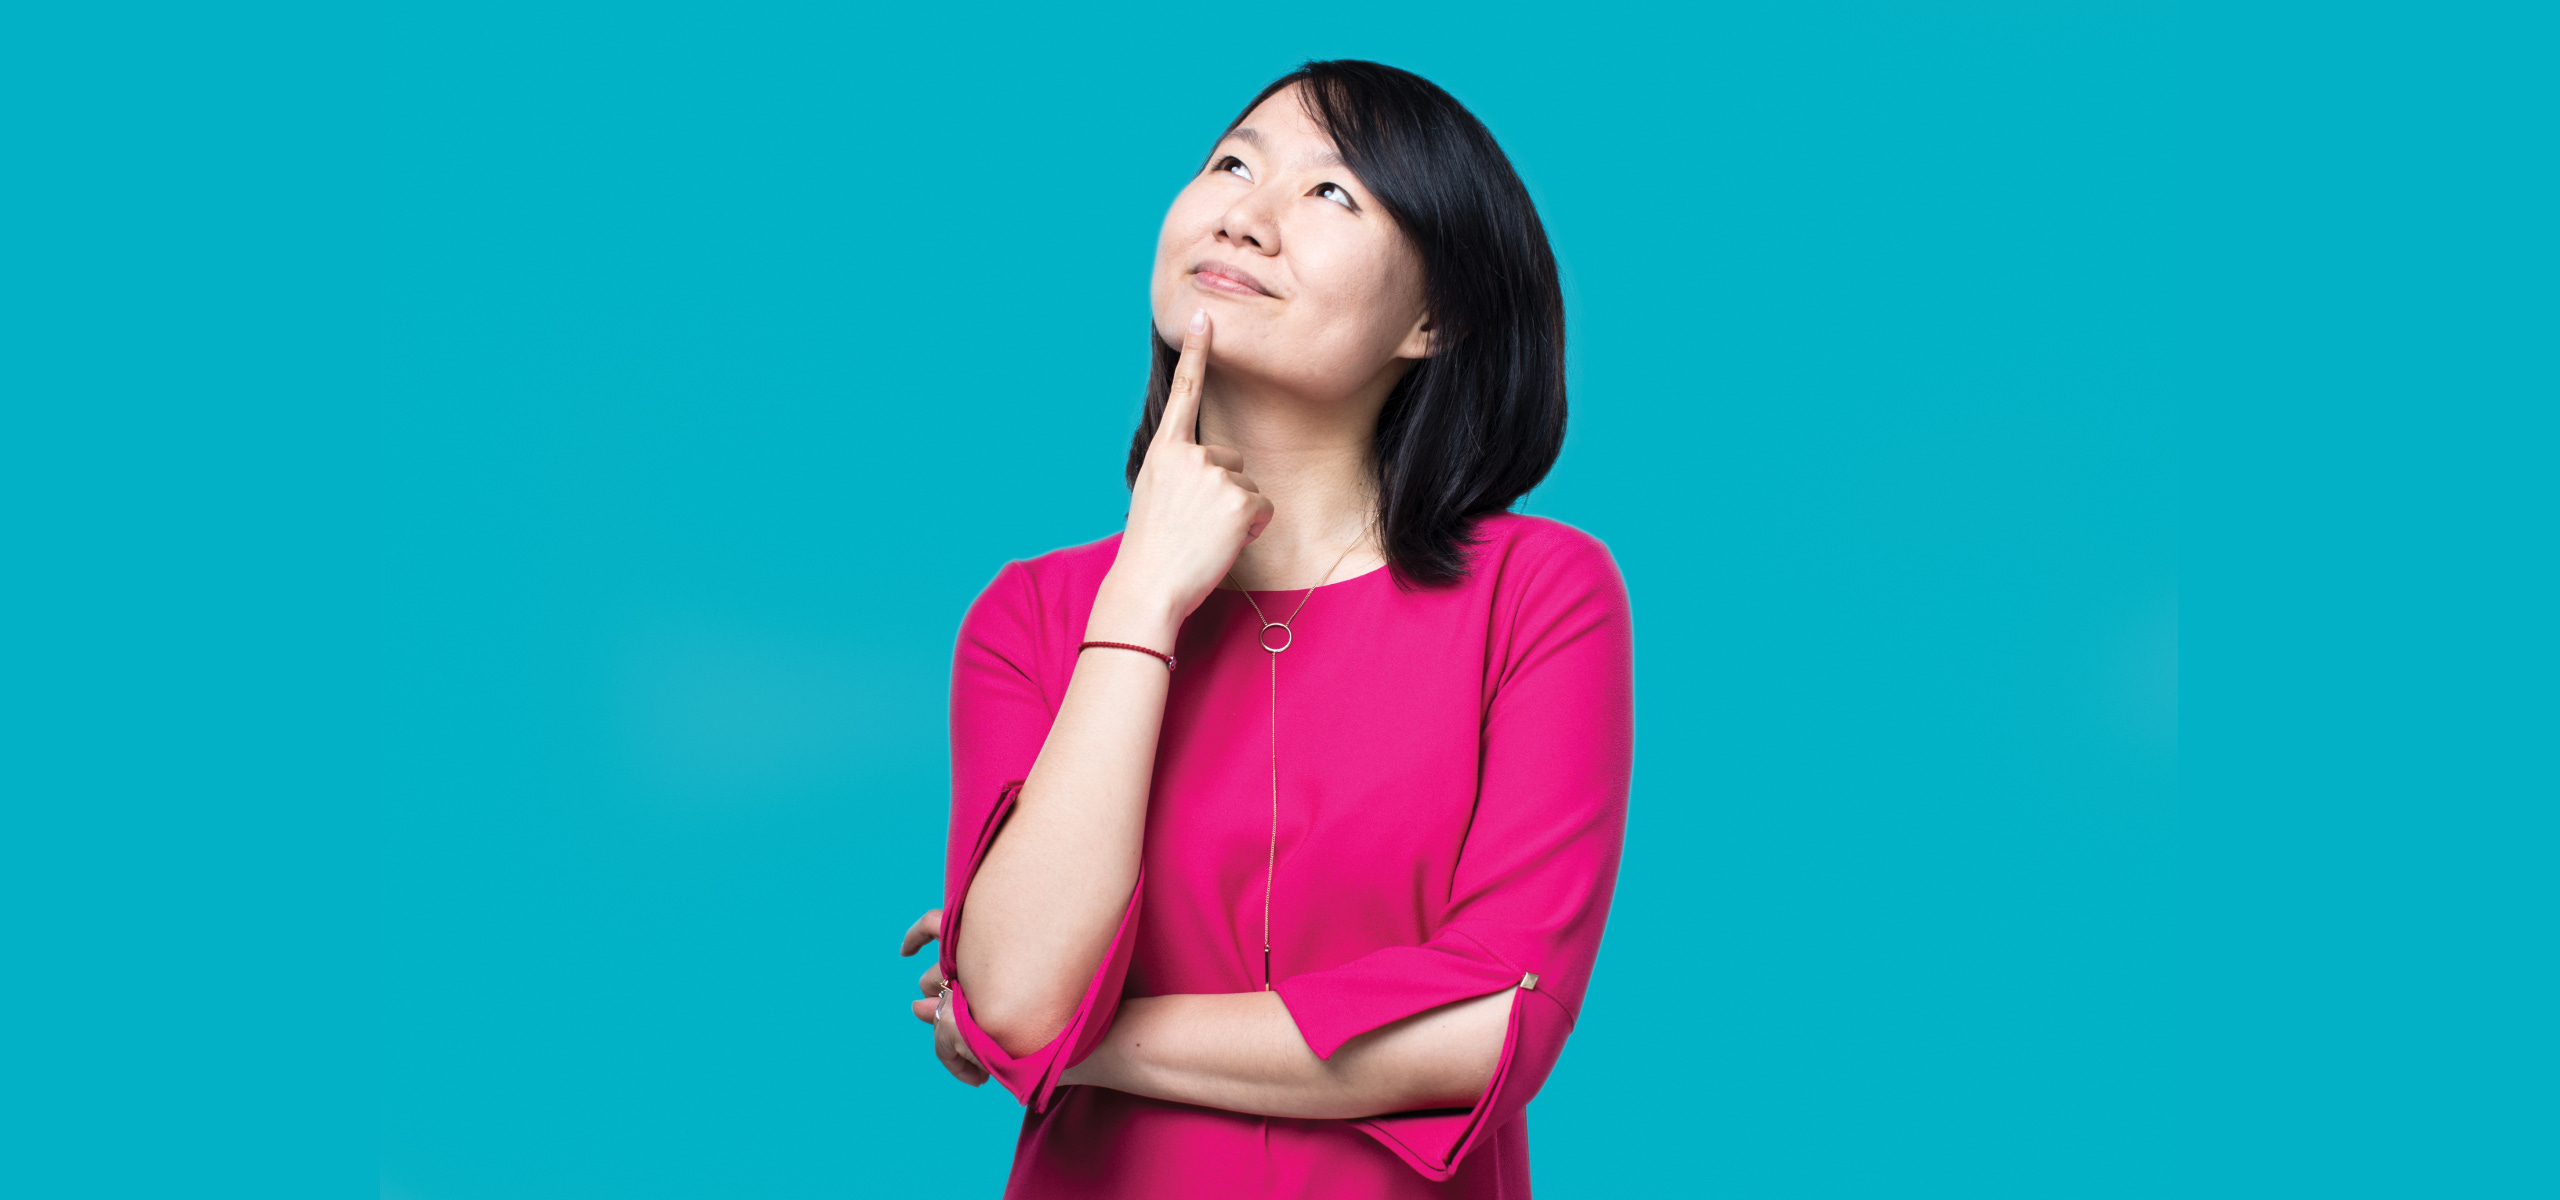 Jing Jing Tan posing while looking upwards and smiling.